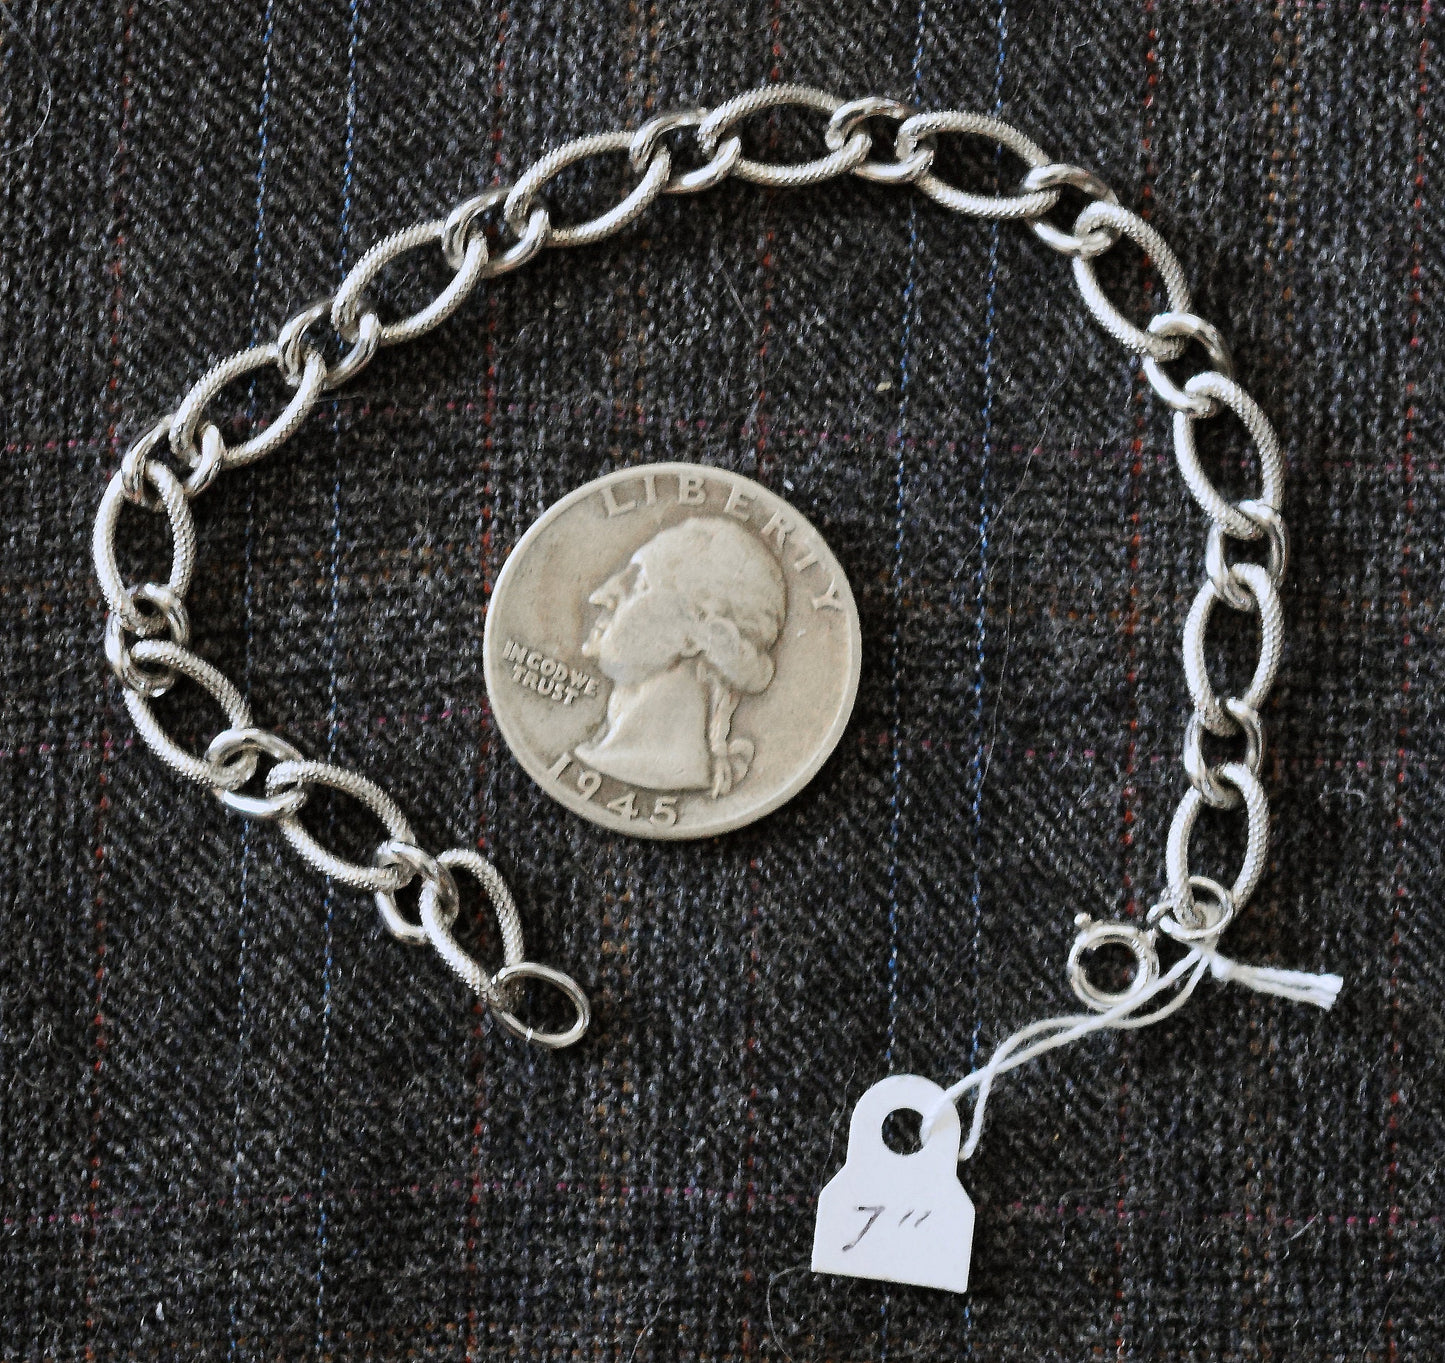 7 inch sterling silver open link bracelet - great for a charm bracelet!